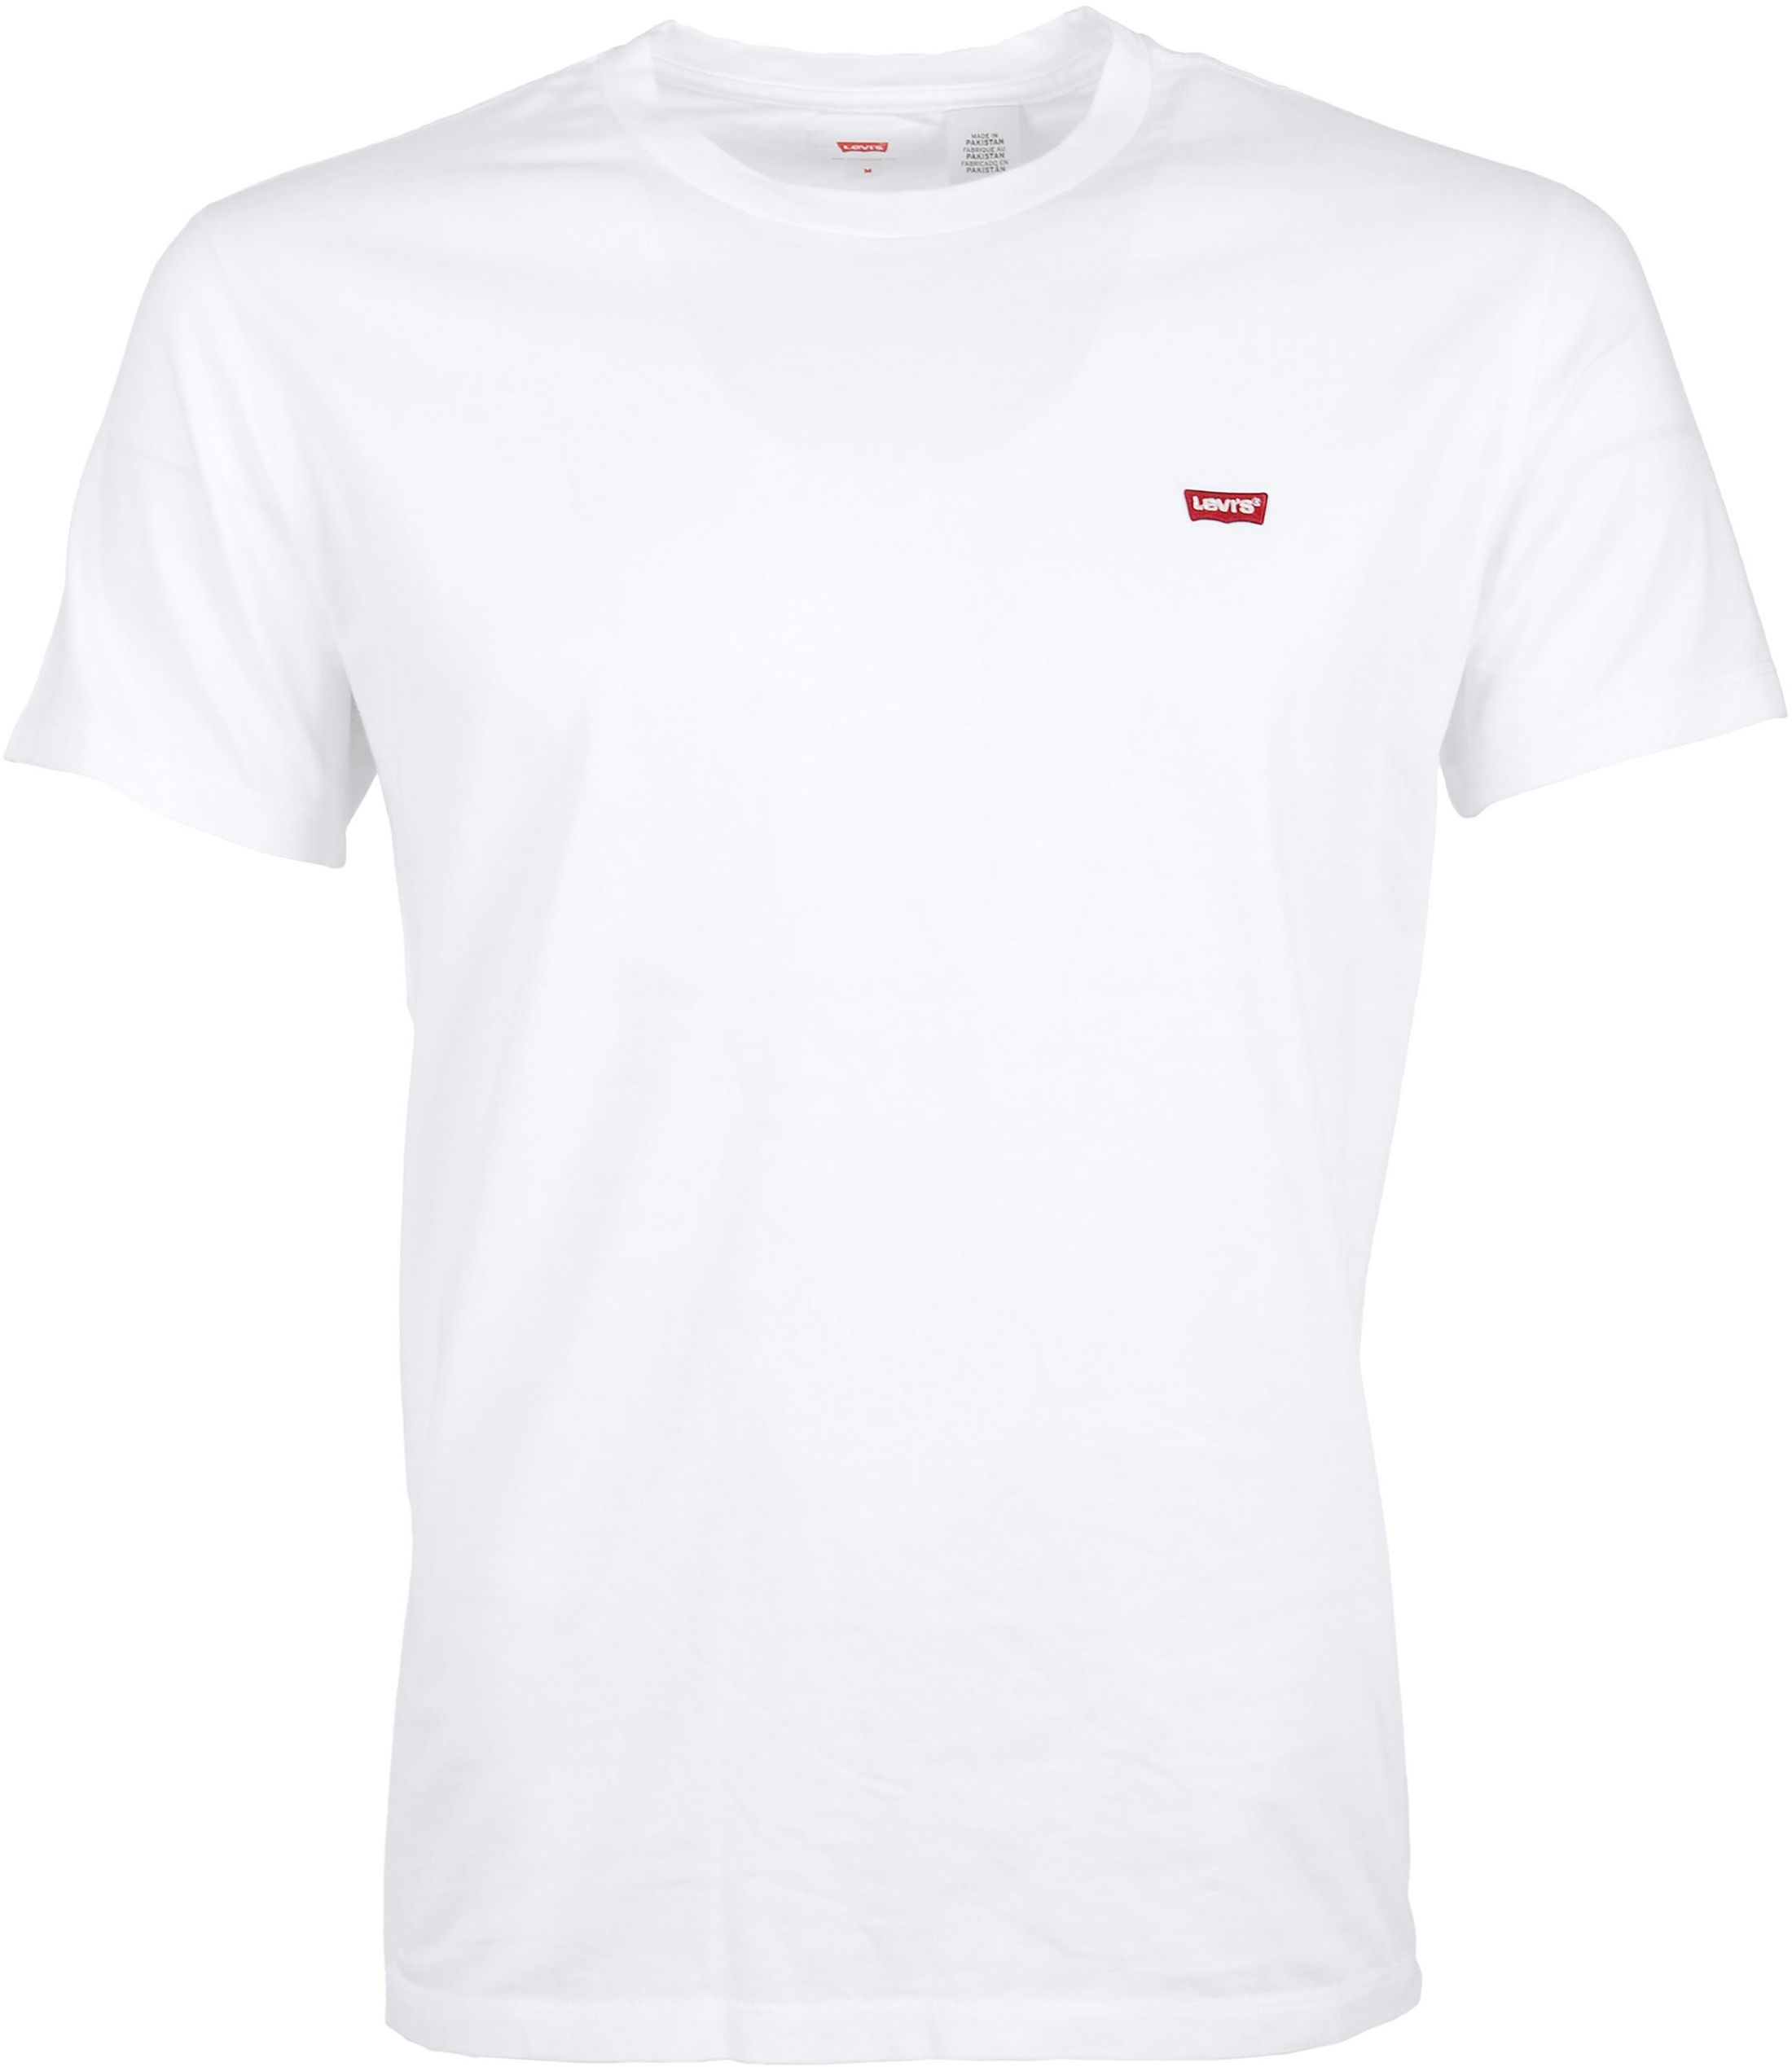 Levi's T-shirt Original White size XXL